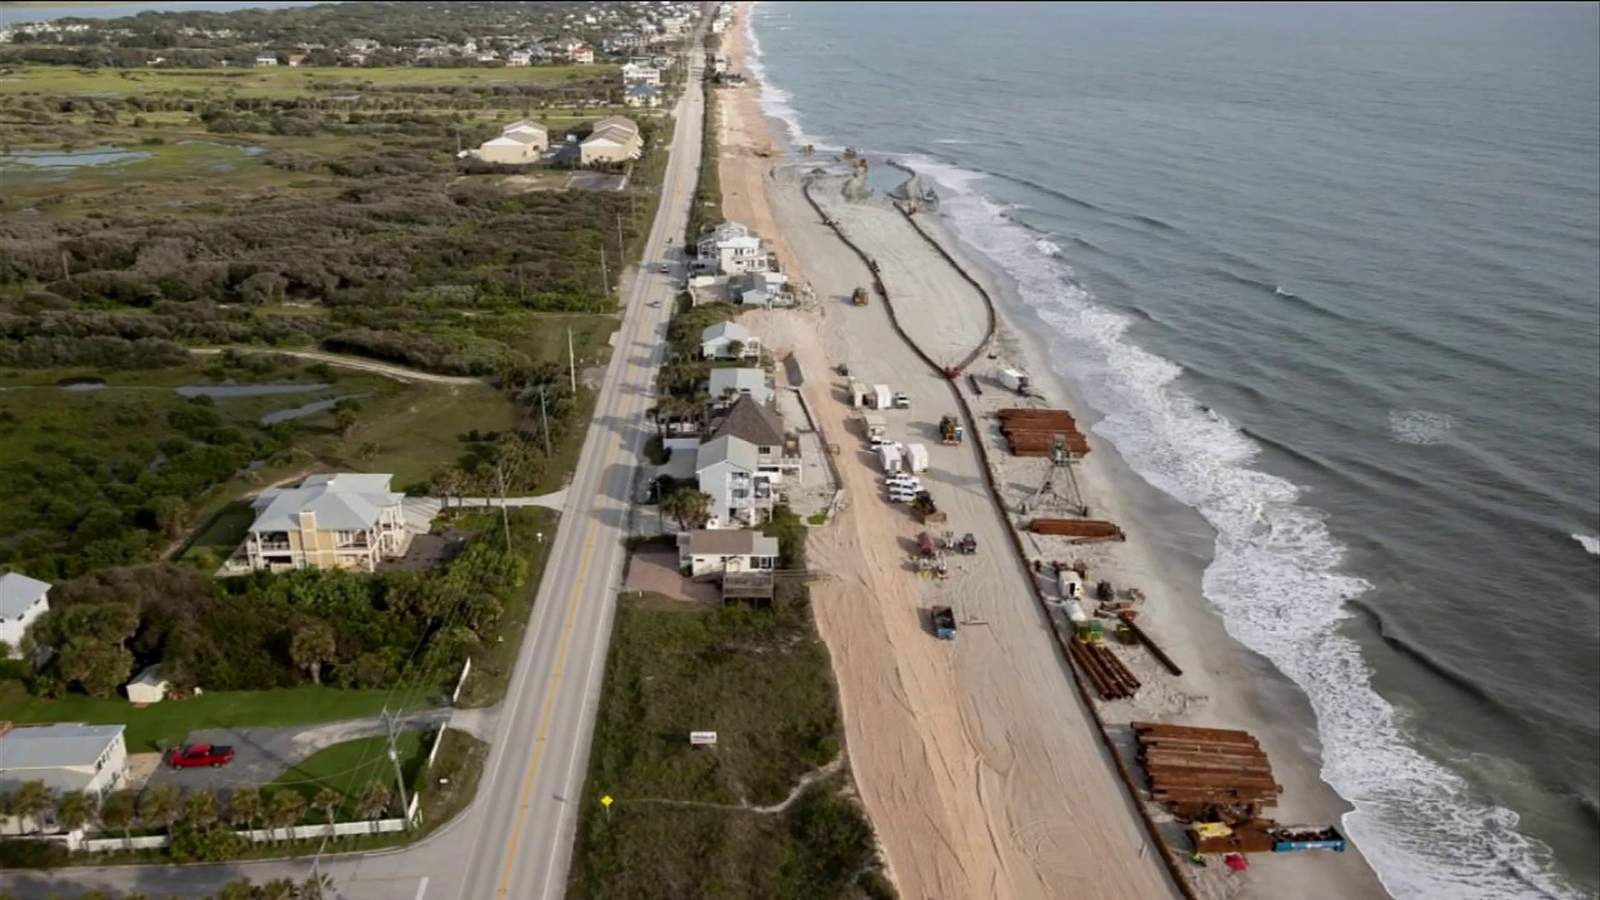 Engineers eye December for completion of Vilano Beach restoration